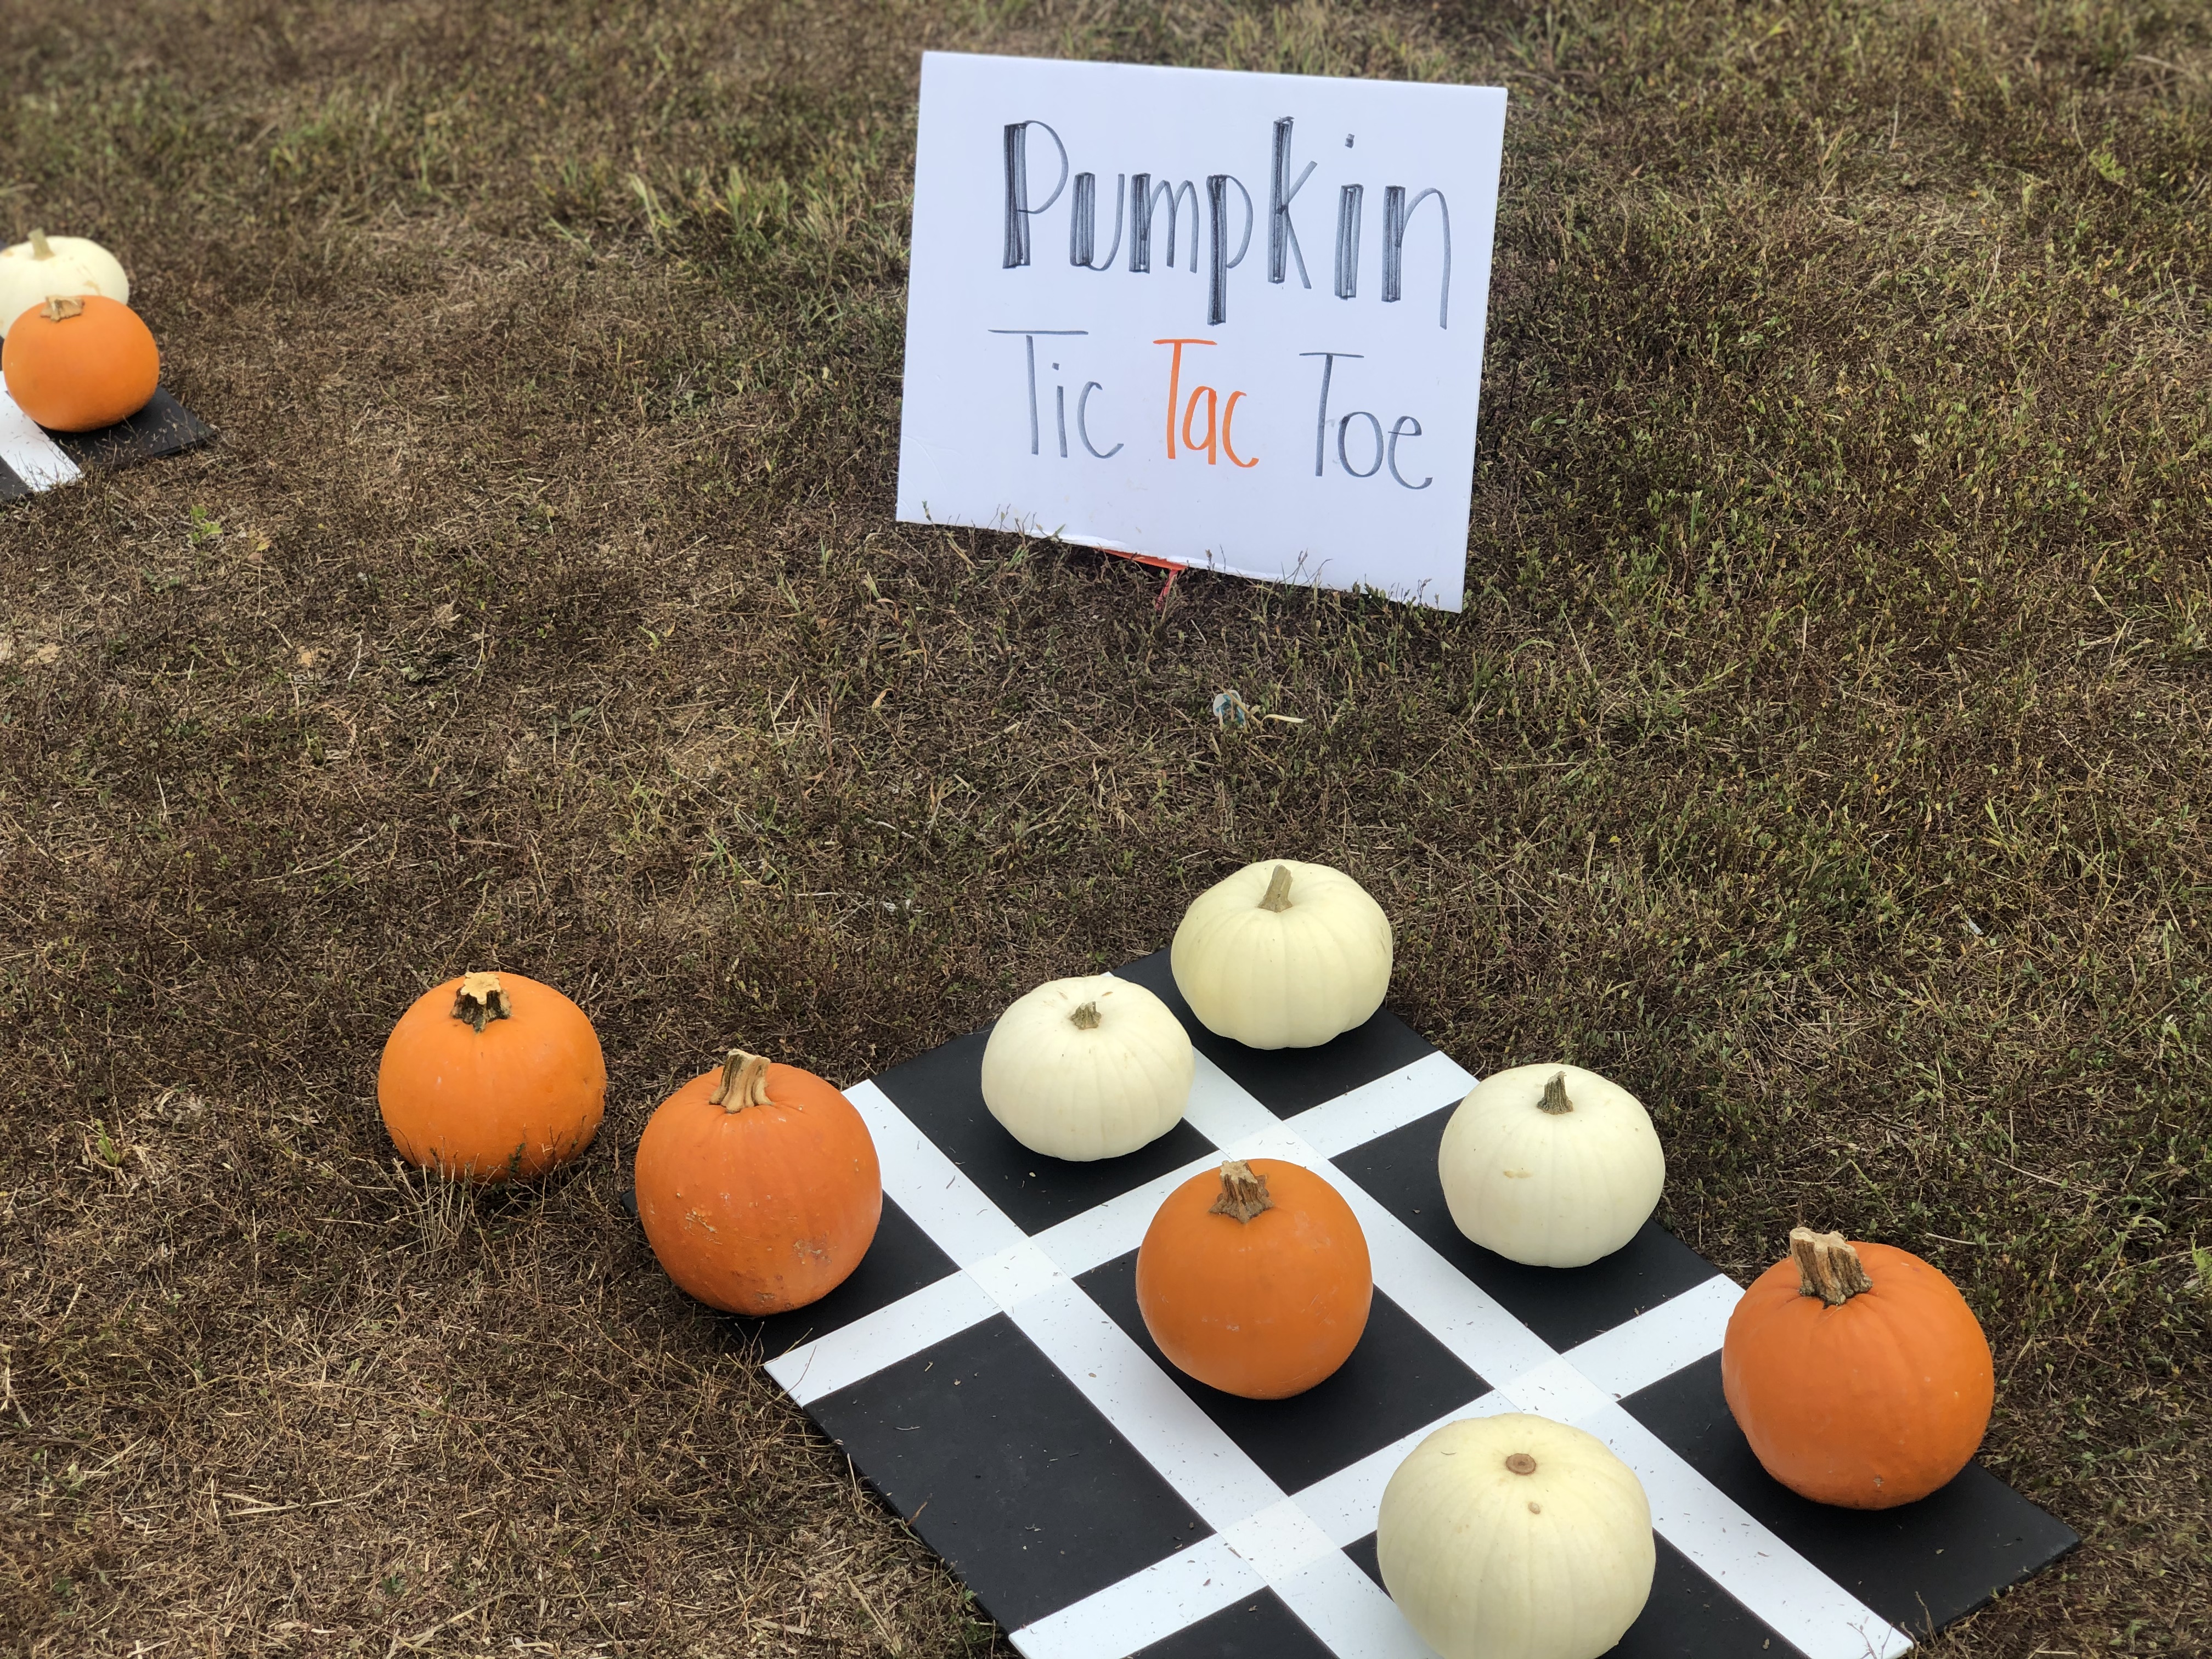 Halloween Games for Kids - Pumpkin Tic Tac Toe - Fun Kids Games via Misty Nelson, mom blogger @frostedevents